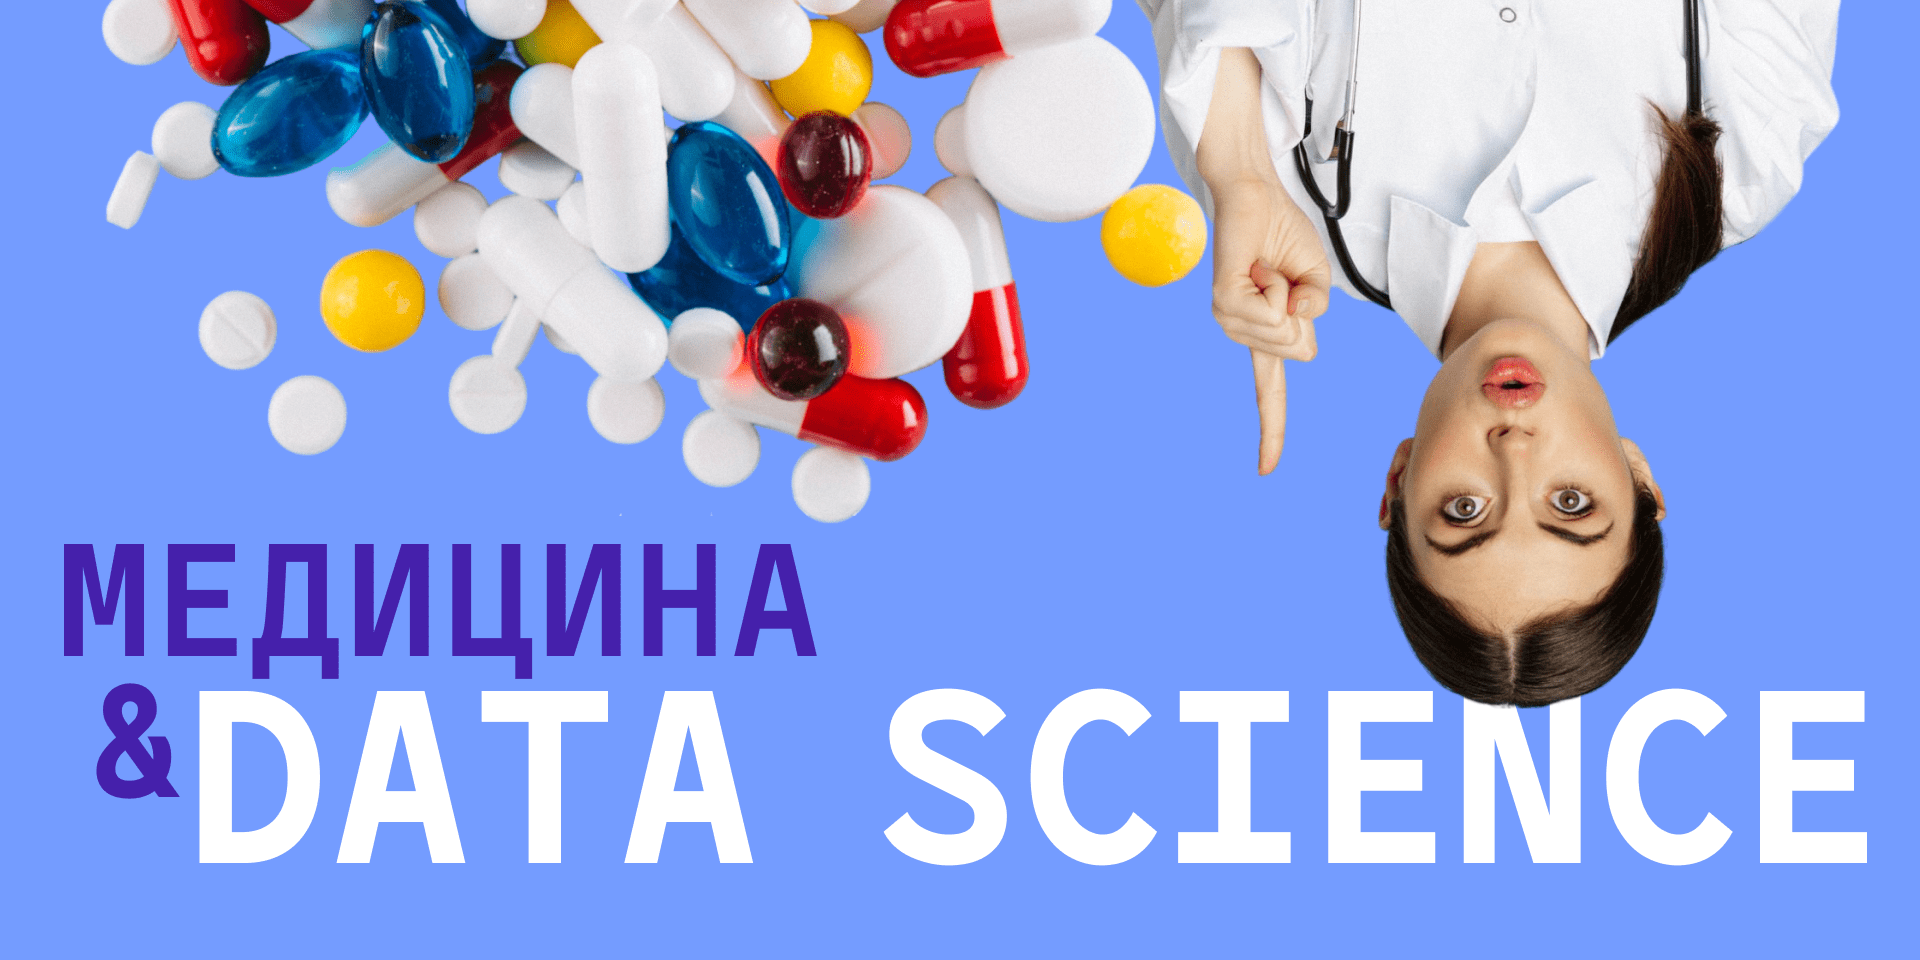 Data Science  в медицине